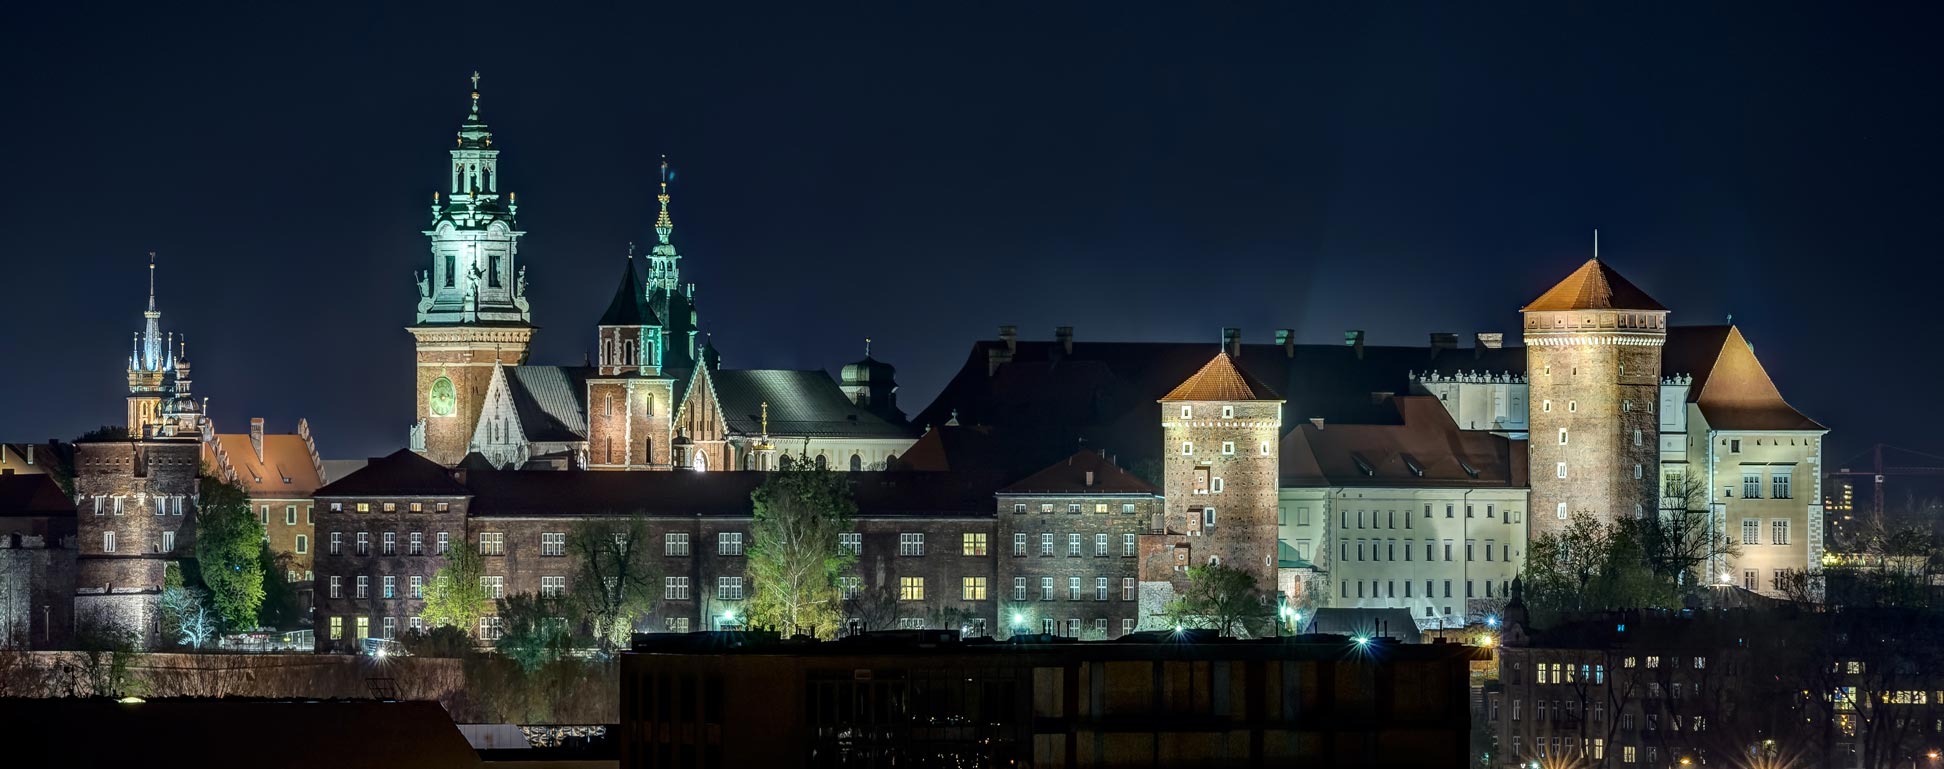 Wawel Royal Castle on the left bank of the Vistula River in Kraków, Poland